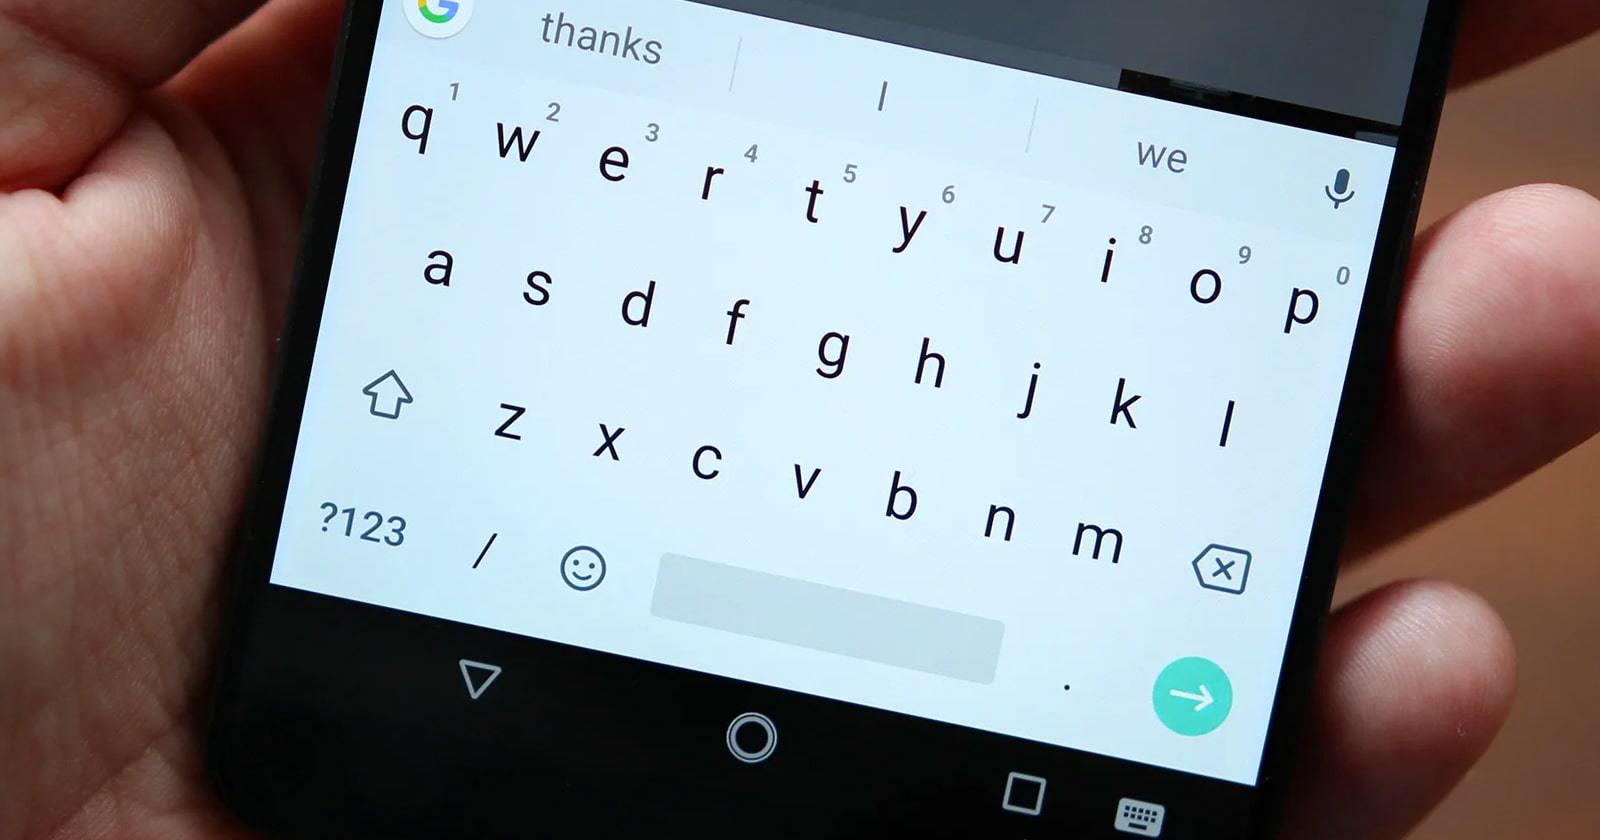 How to Change Keyboard Language on LG Phone